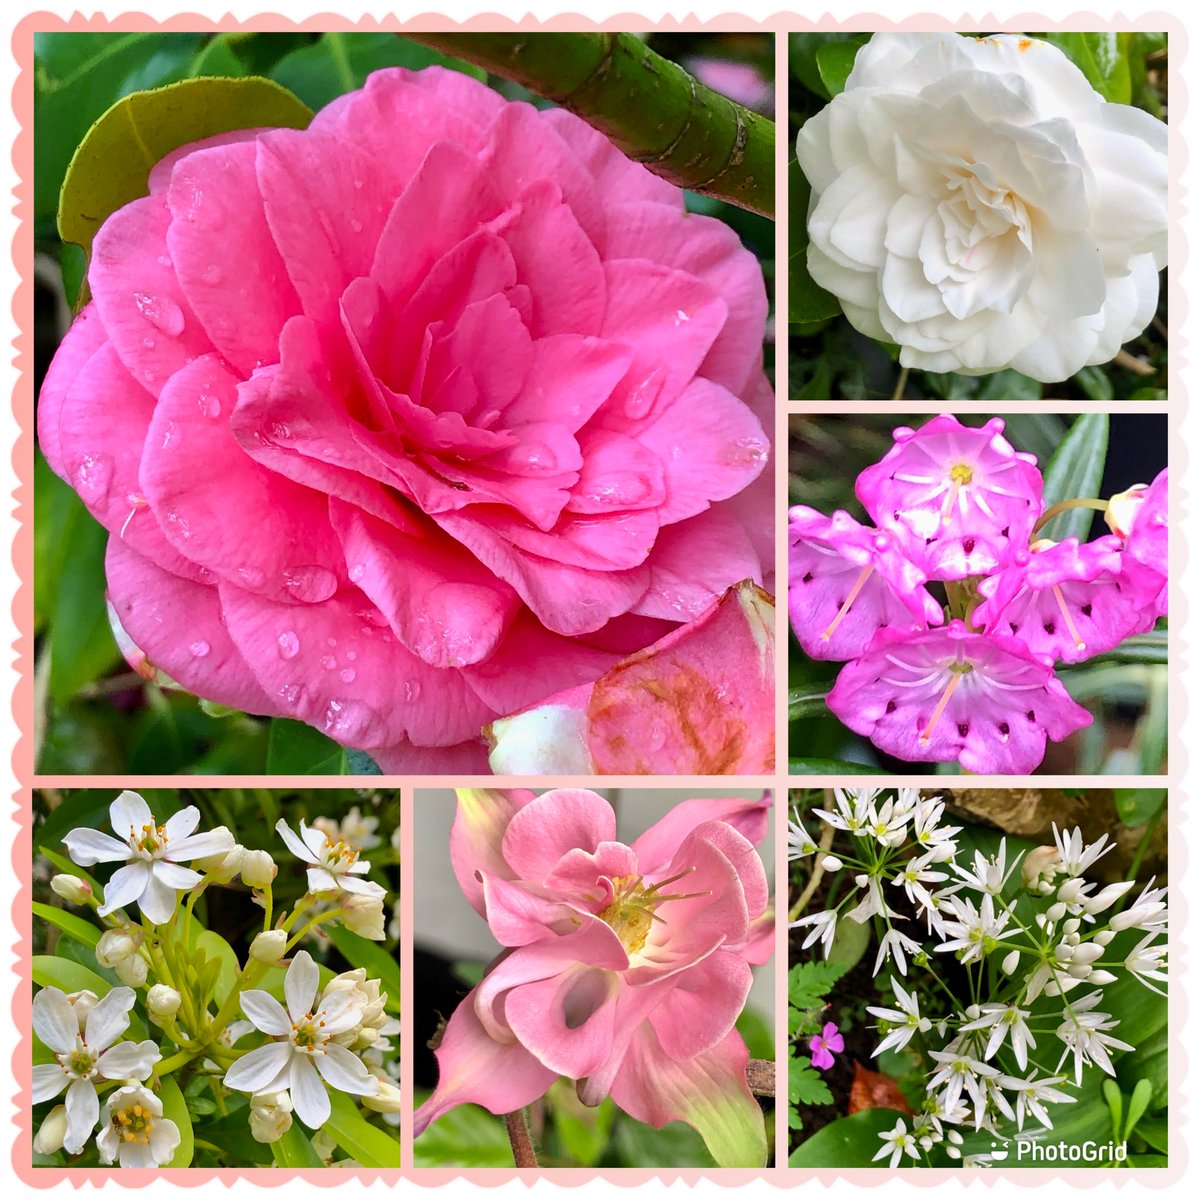 #FlowersOnFriday in the sun ☀️ camellia still blooming 💗#PinkFriday #Gardening #FridayVibes